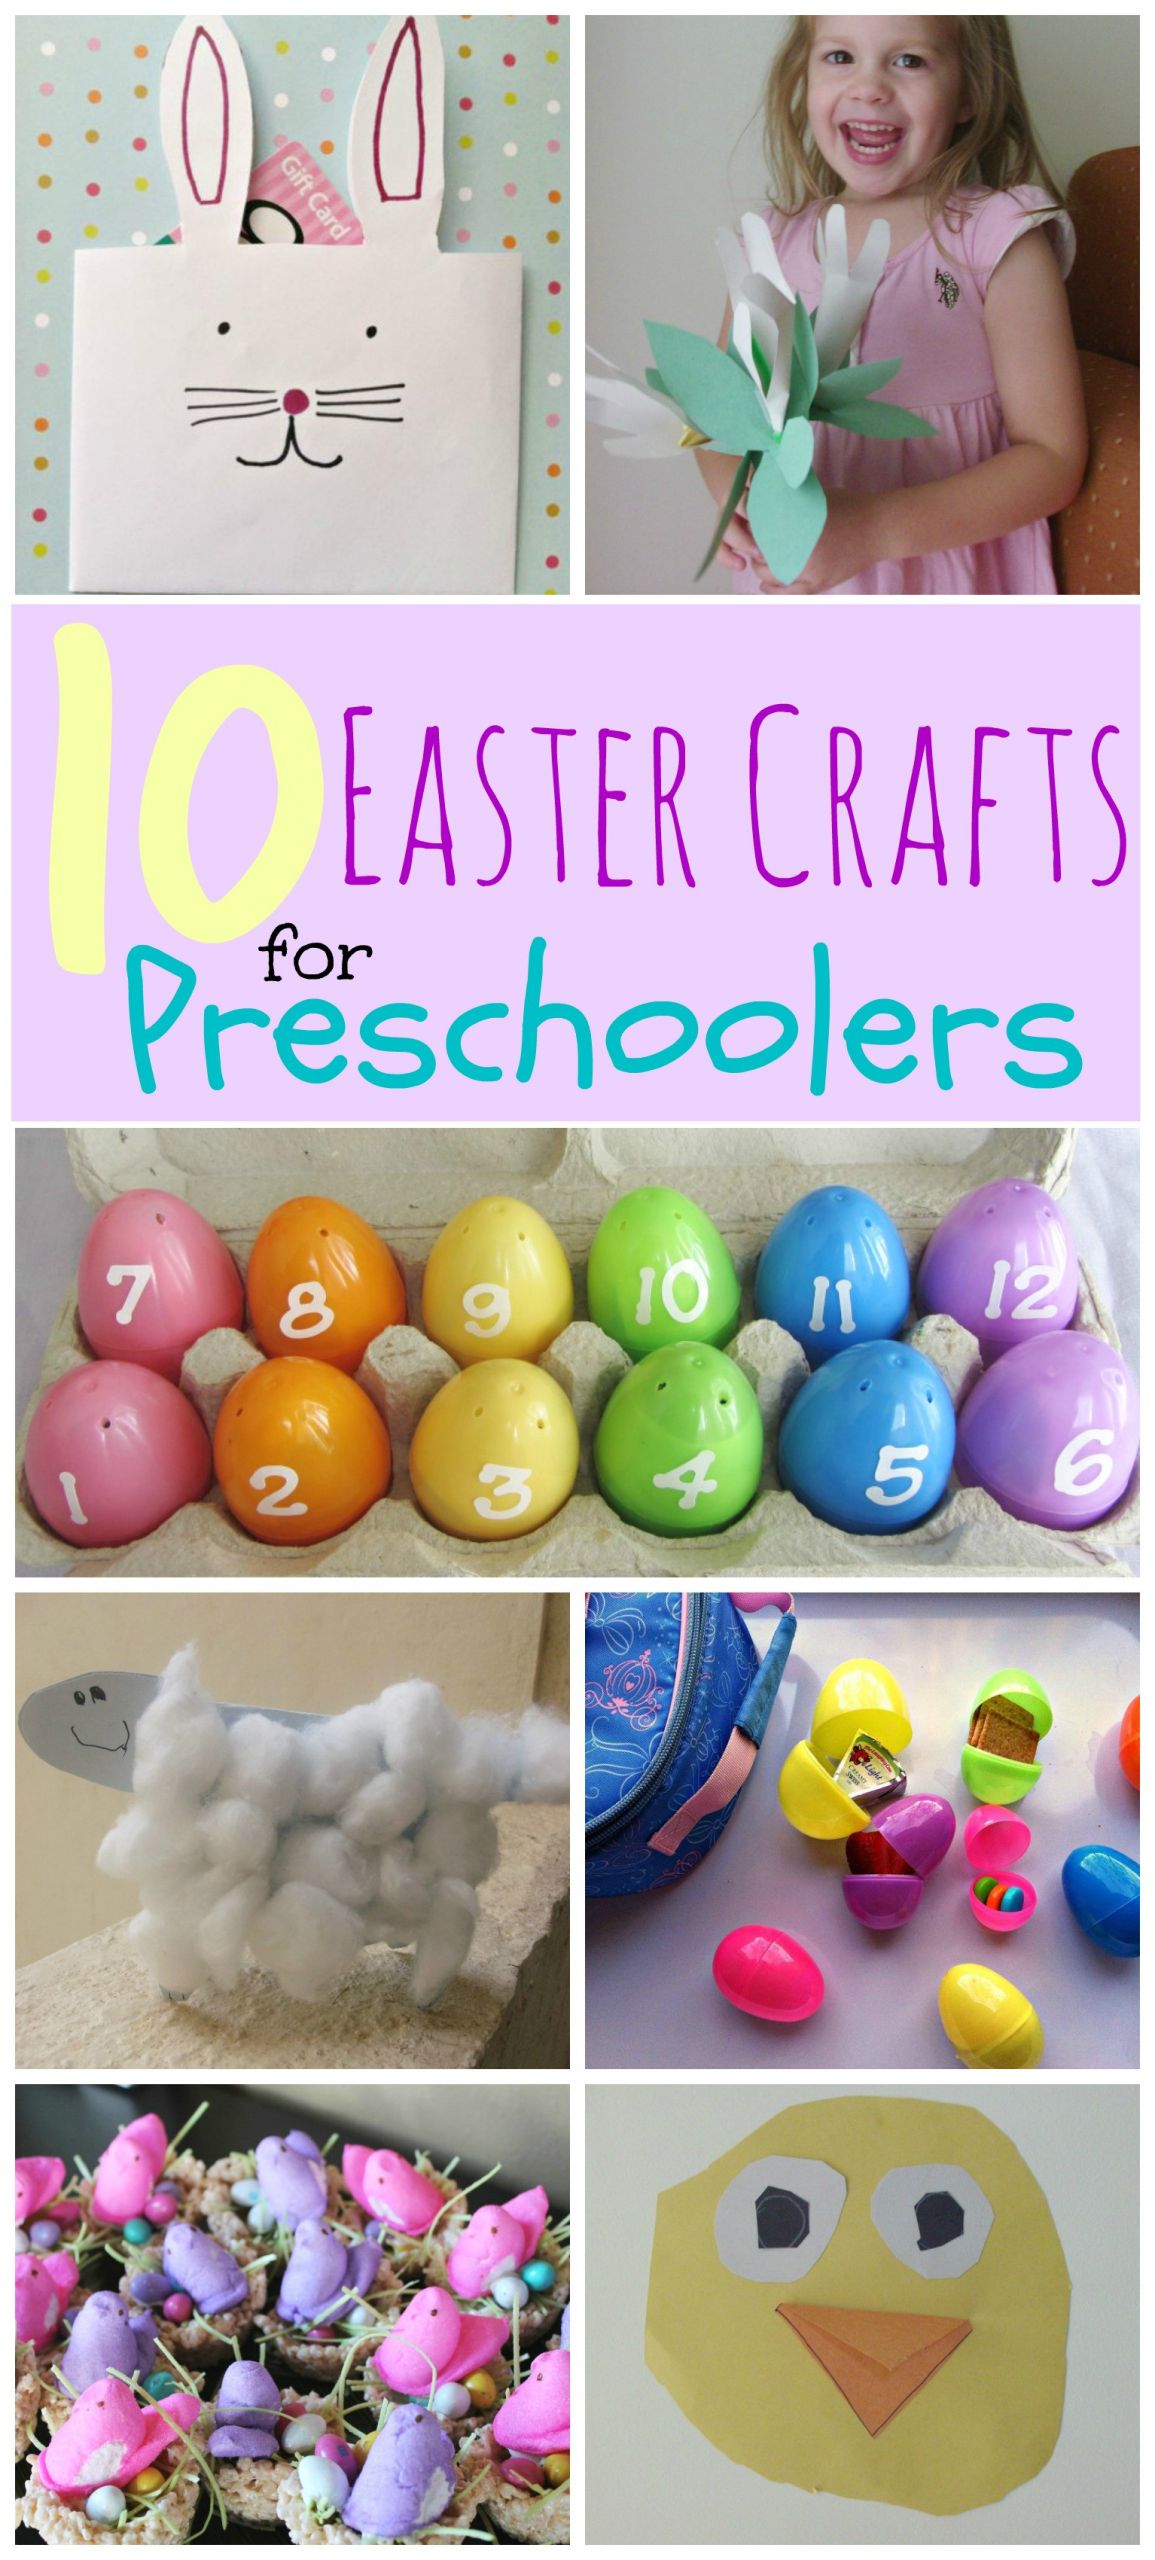 Easter Craft Ideas For Preschoolers
 10 Easter Crafts for Preschoolers